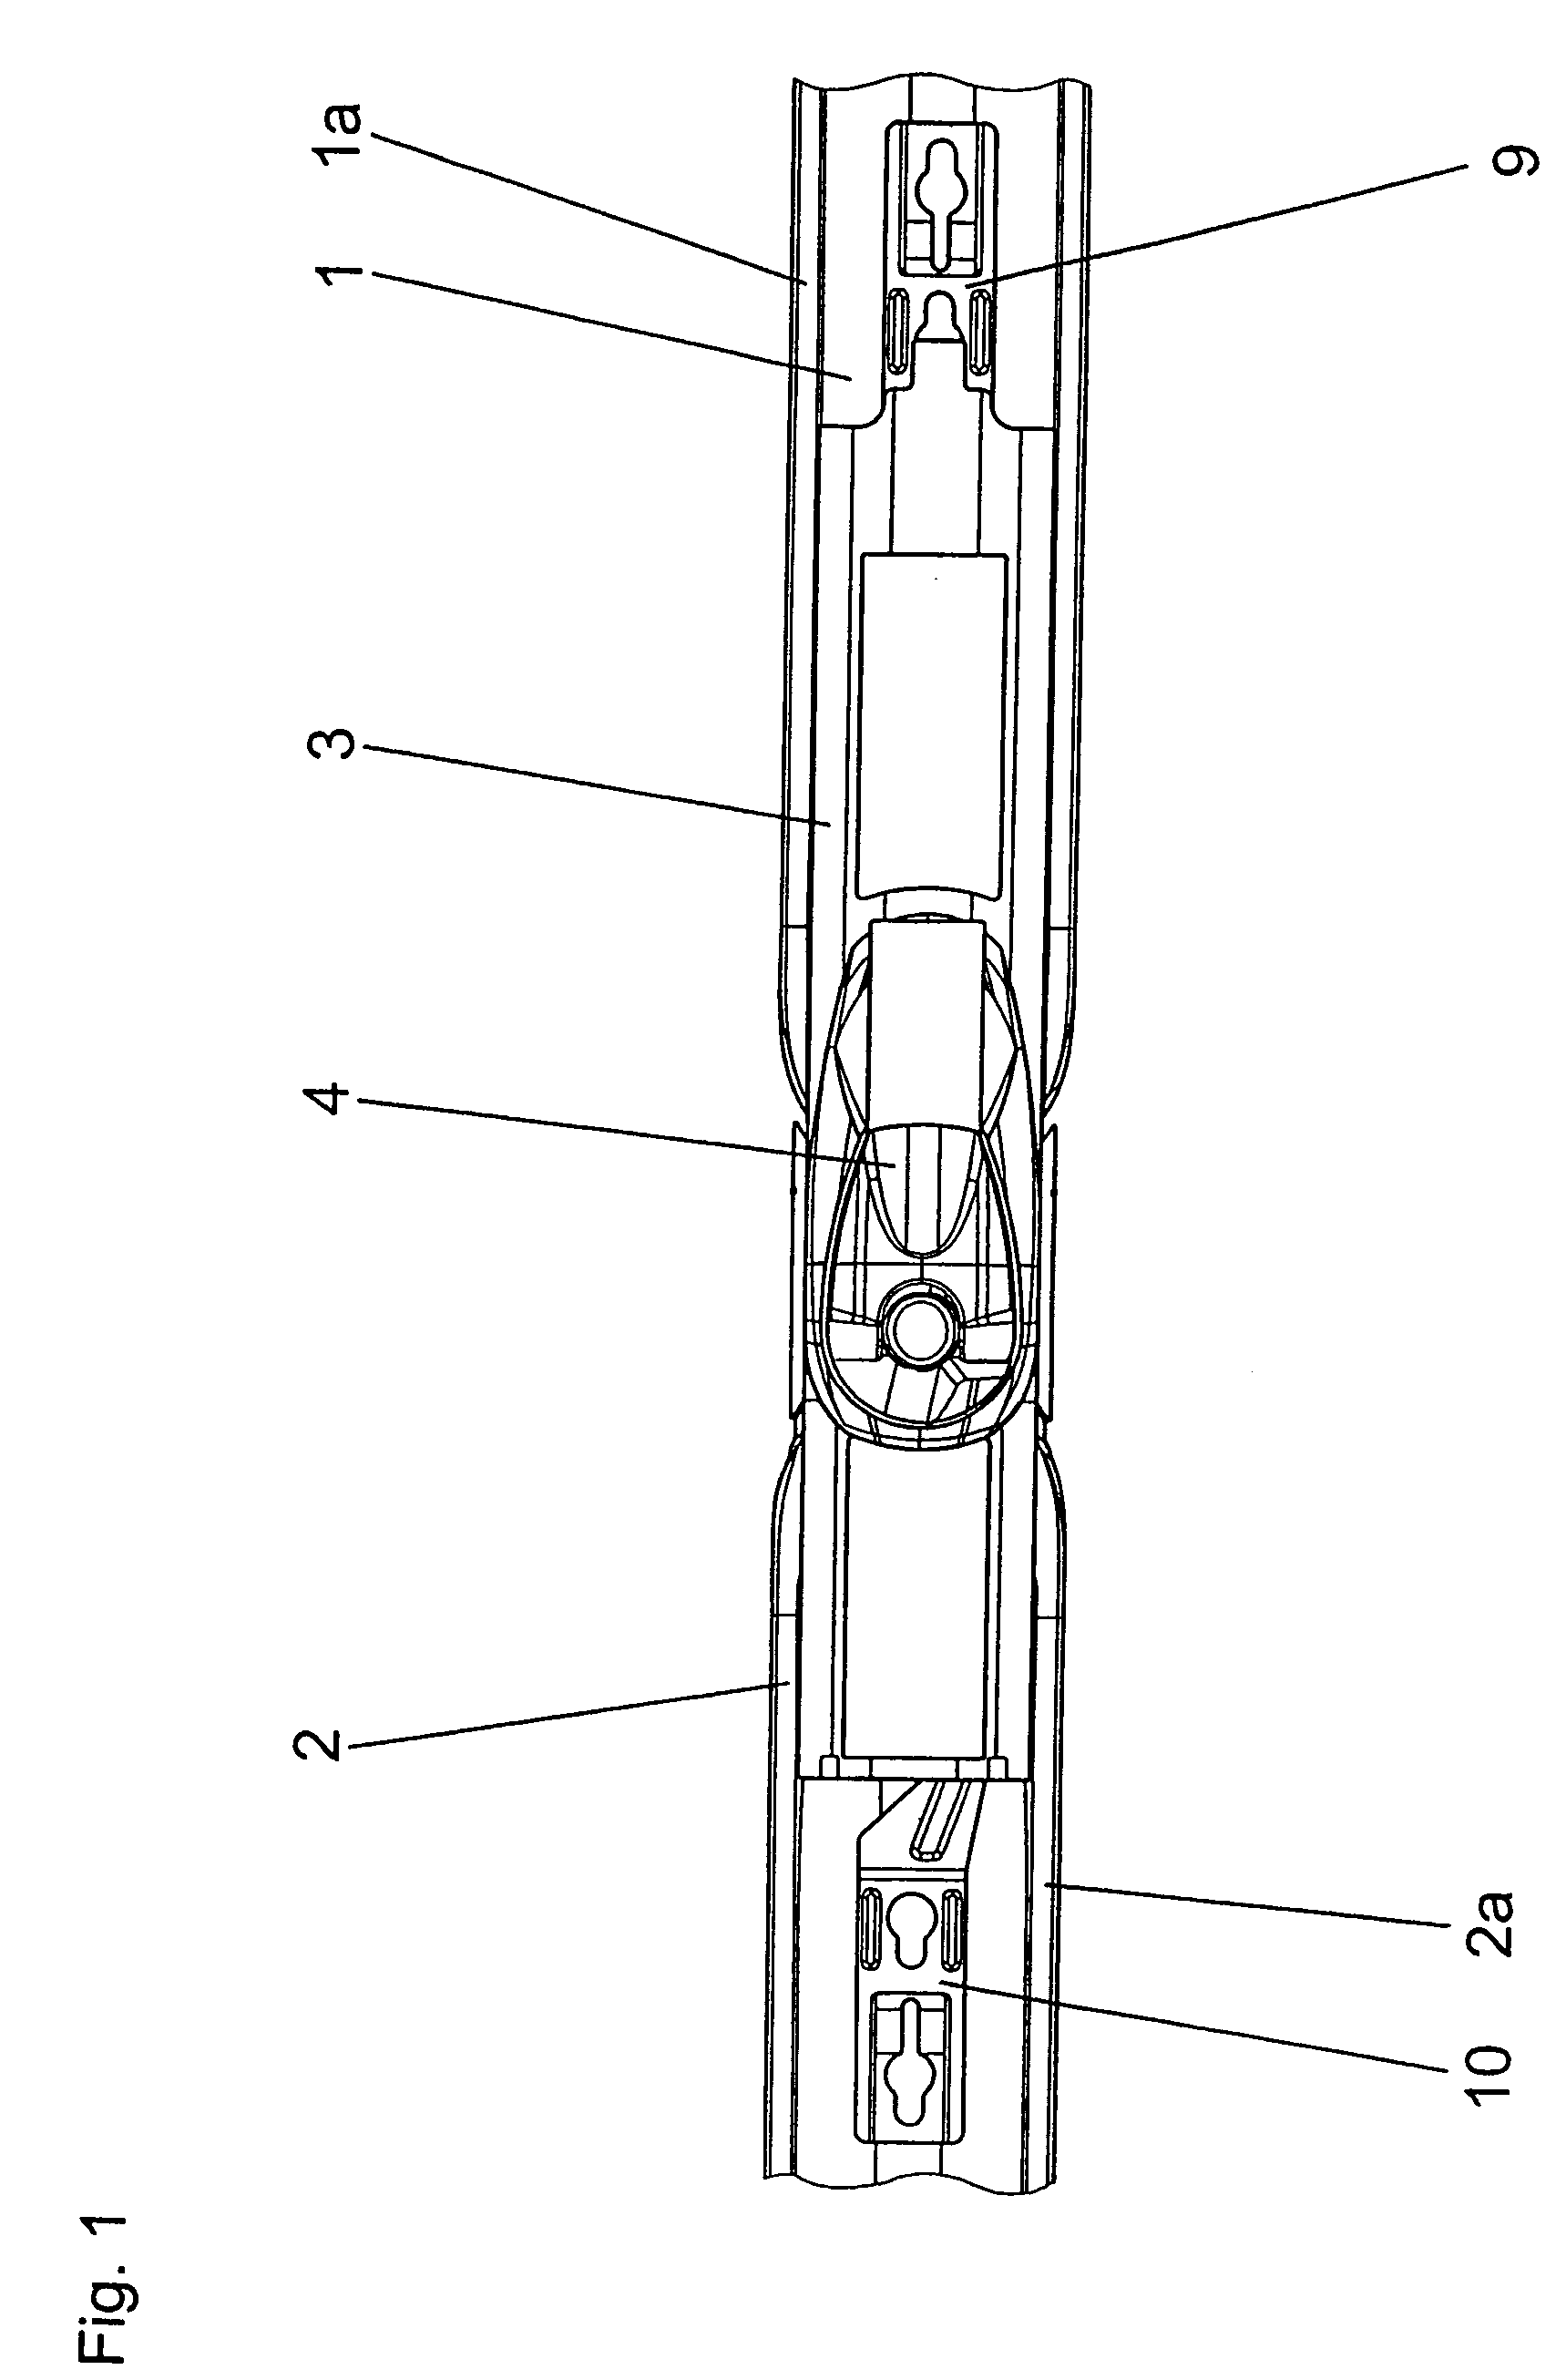 Arrangement for longitudinal adjustment of two binding jaws of a ski binding